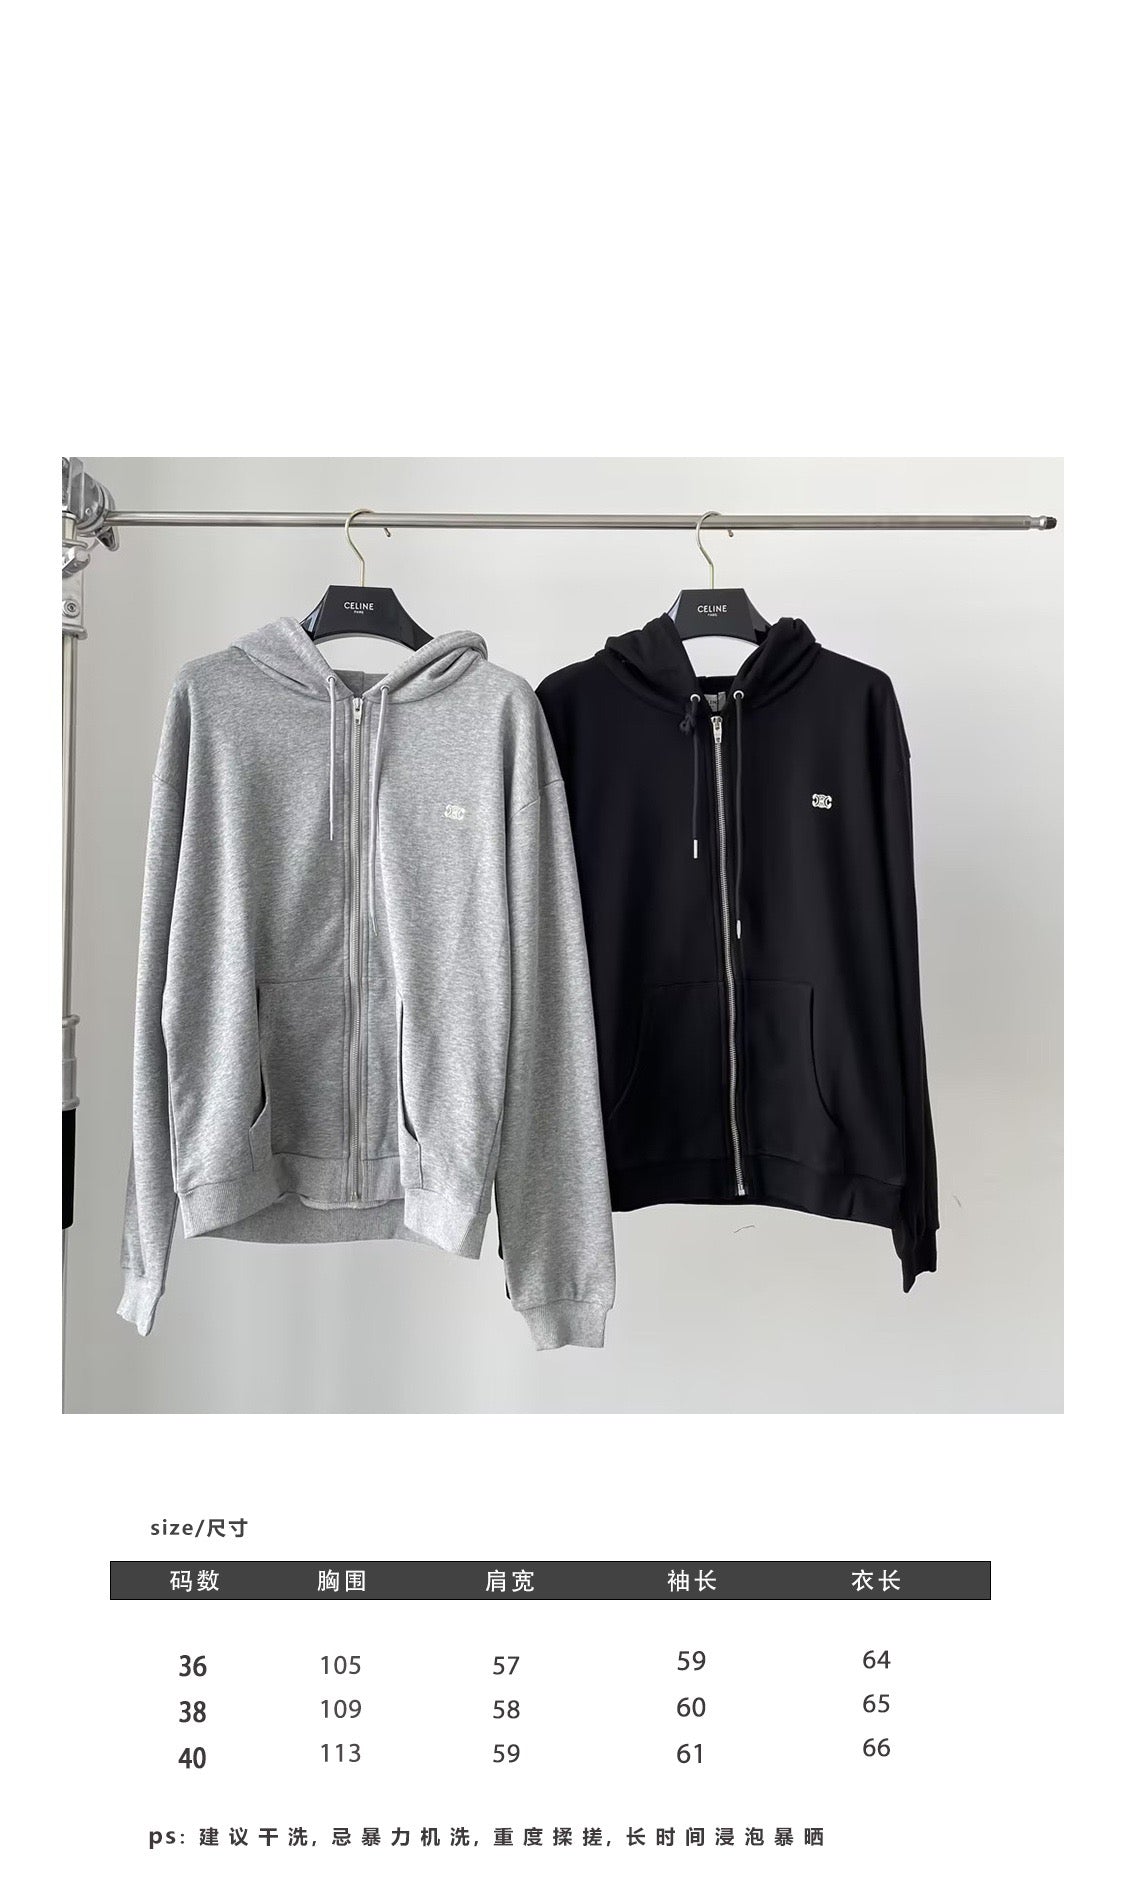 Black and Grey Jackets